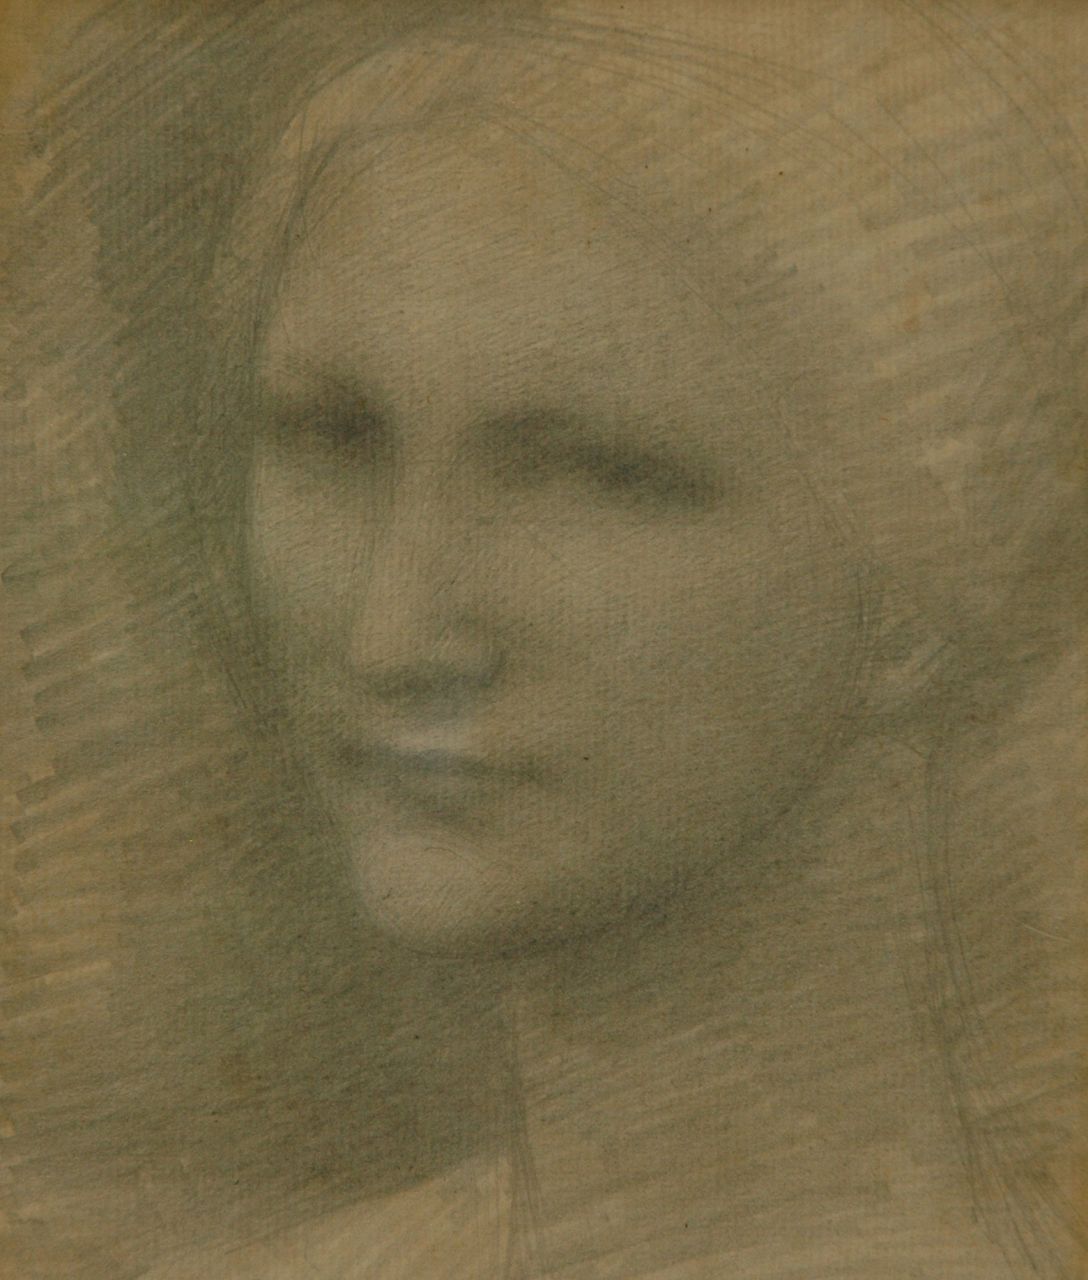 Anne Marinus Broeckman | Vrouwenportret, potlood op papier, 22,0 x 17,0 cm, gesigneerd r.o. met initialen A.M.B.